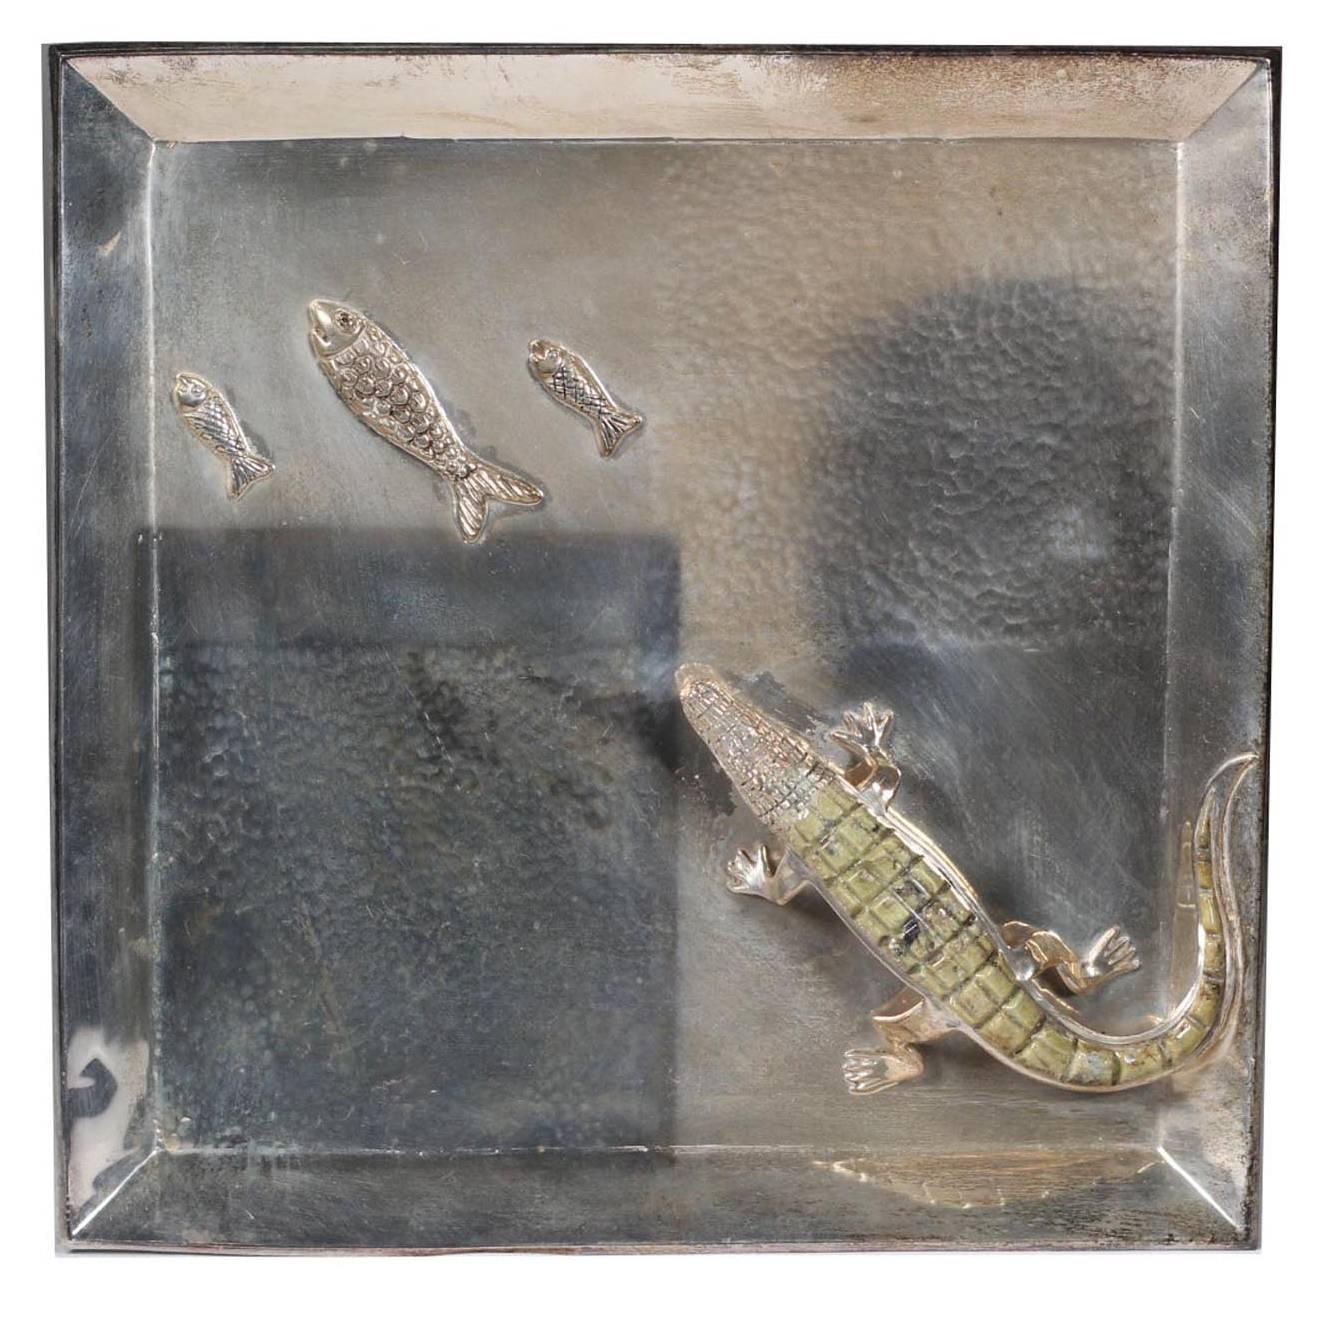 Silver Plated Alligator and Fish Tray by Mexican Artist Emilia Castillo